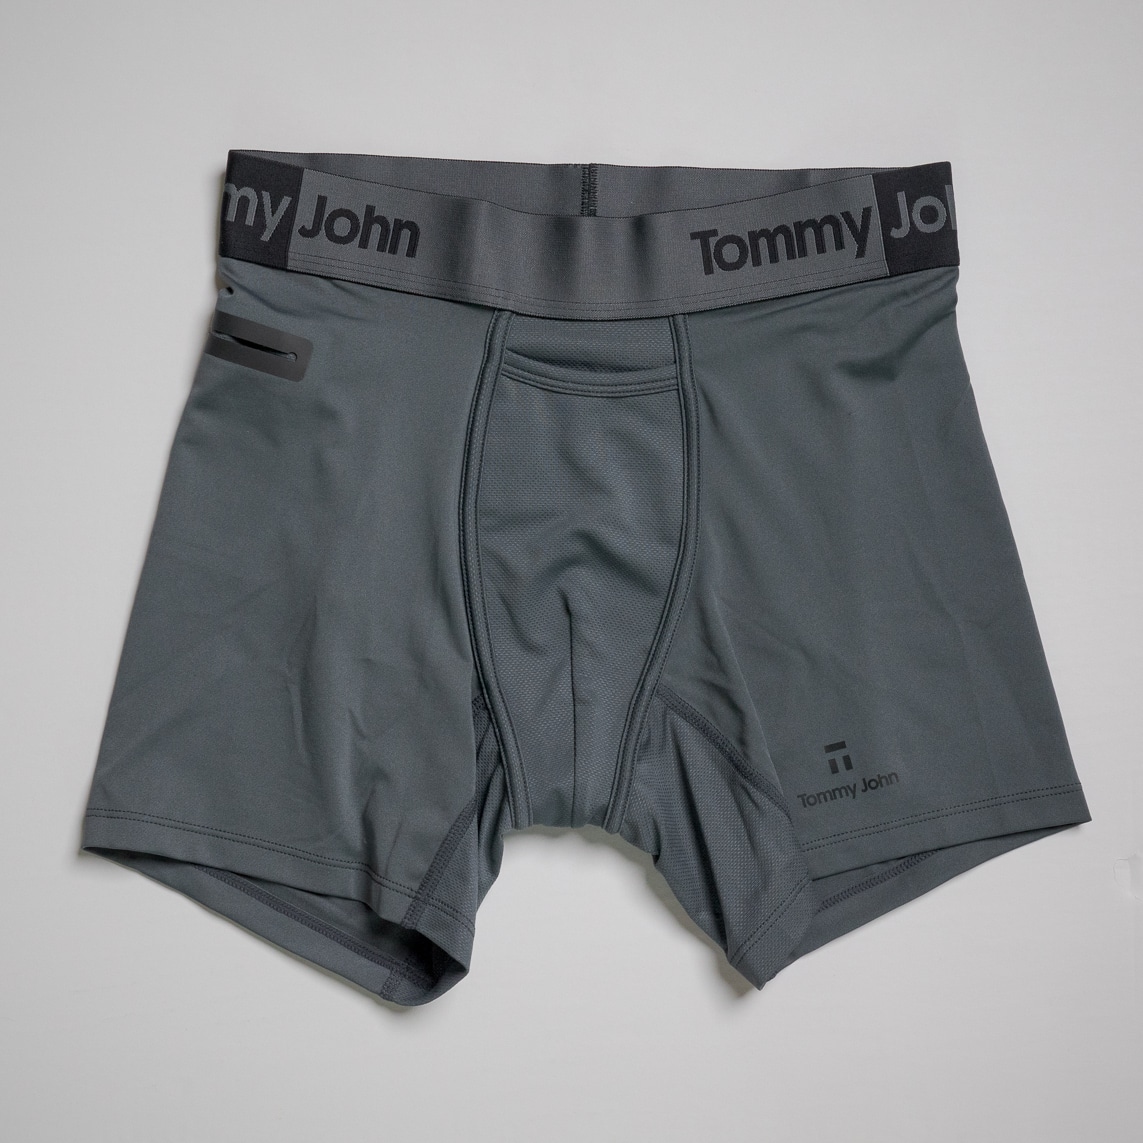 Tommy John Boxer Briefs for Men